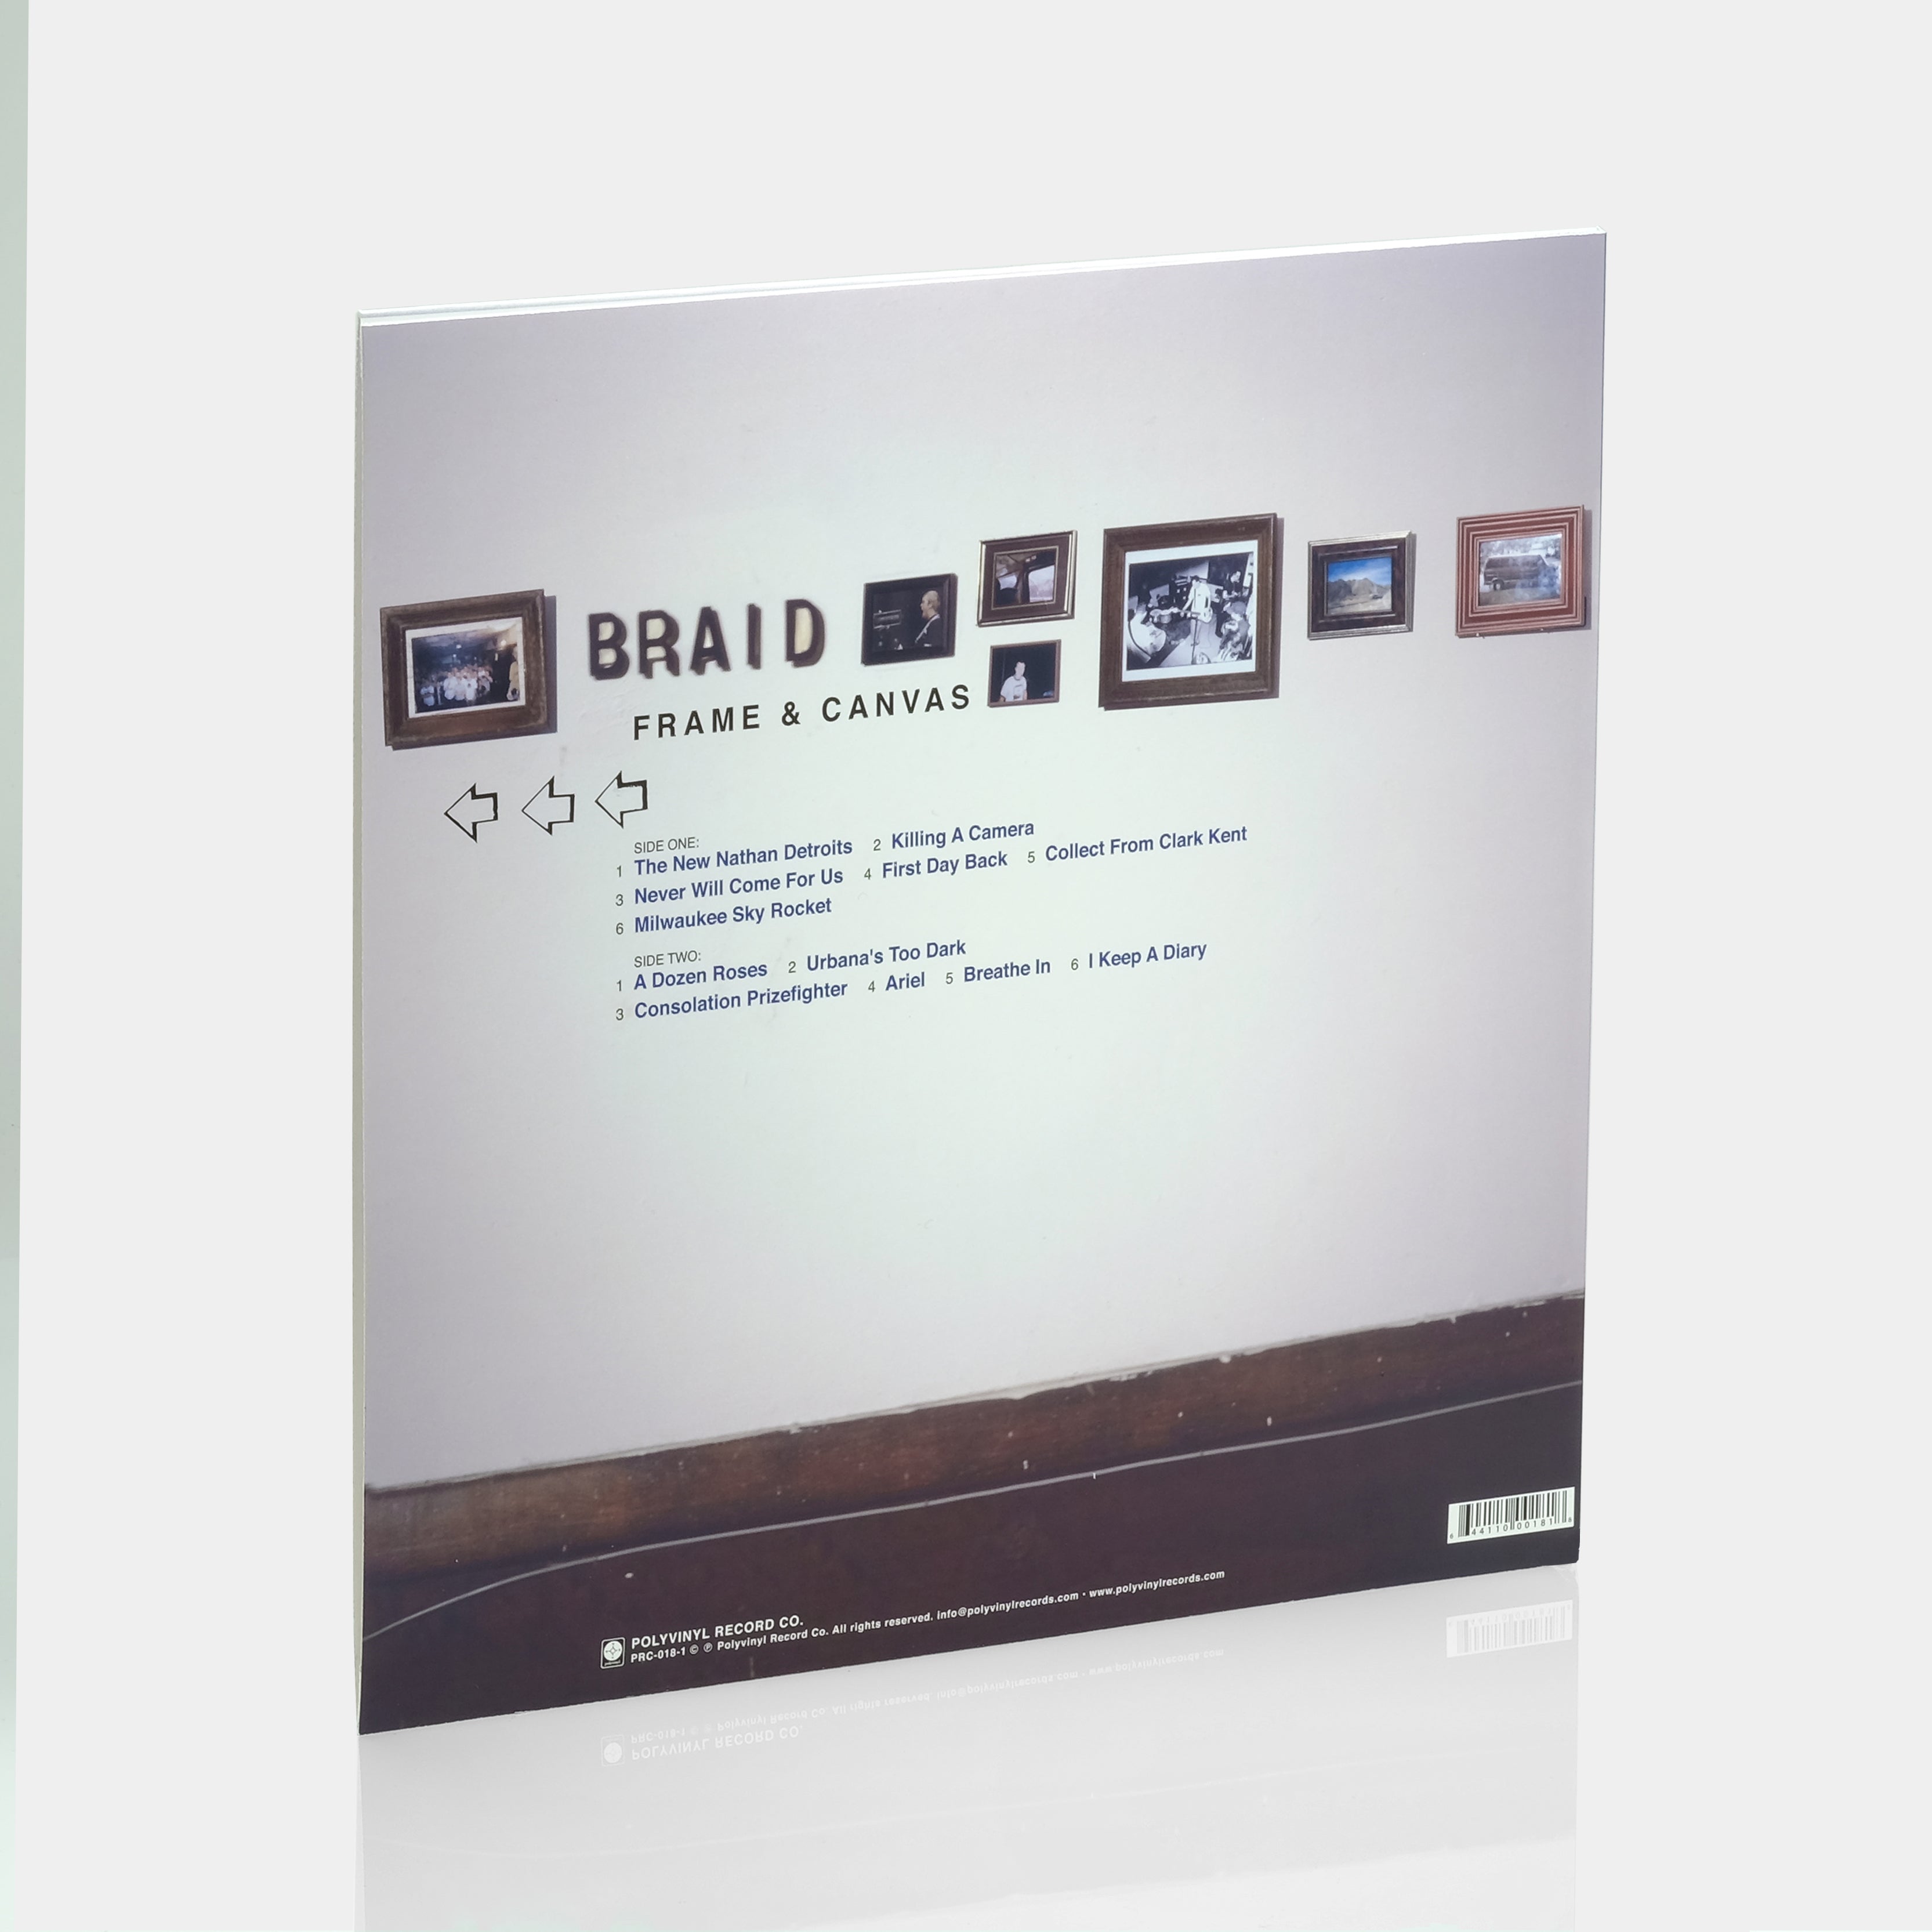 Braid - Frame & Canvas LP Vinyl Record